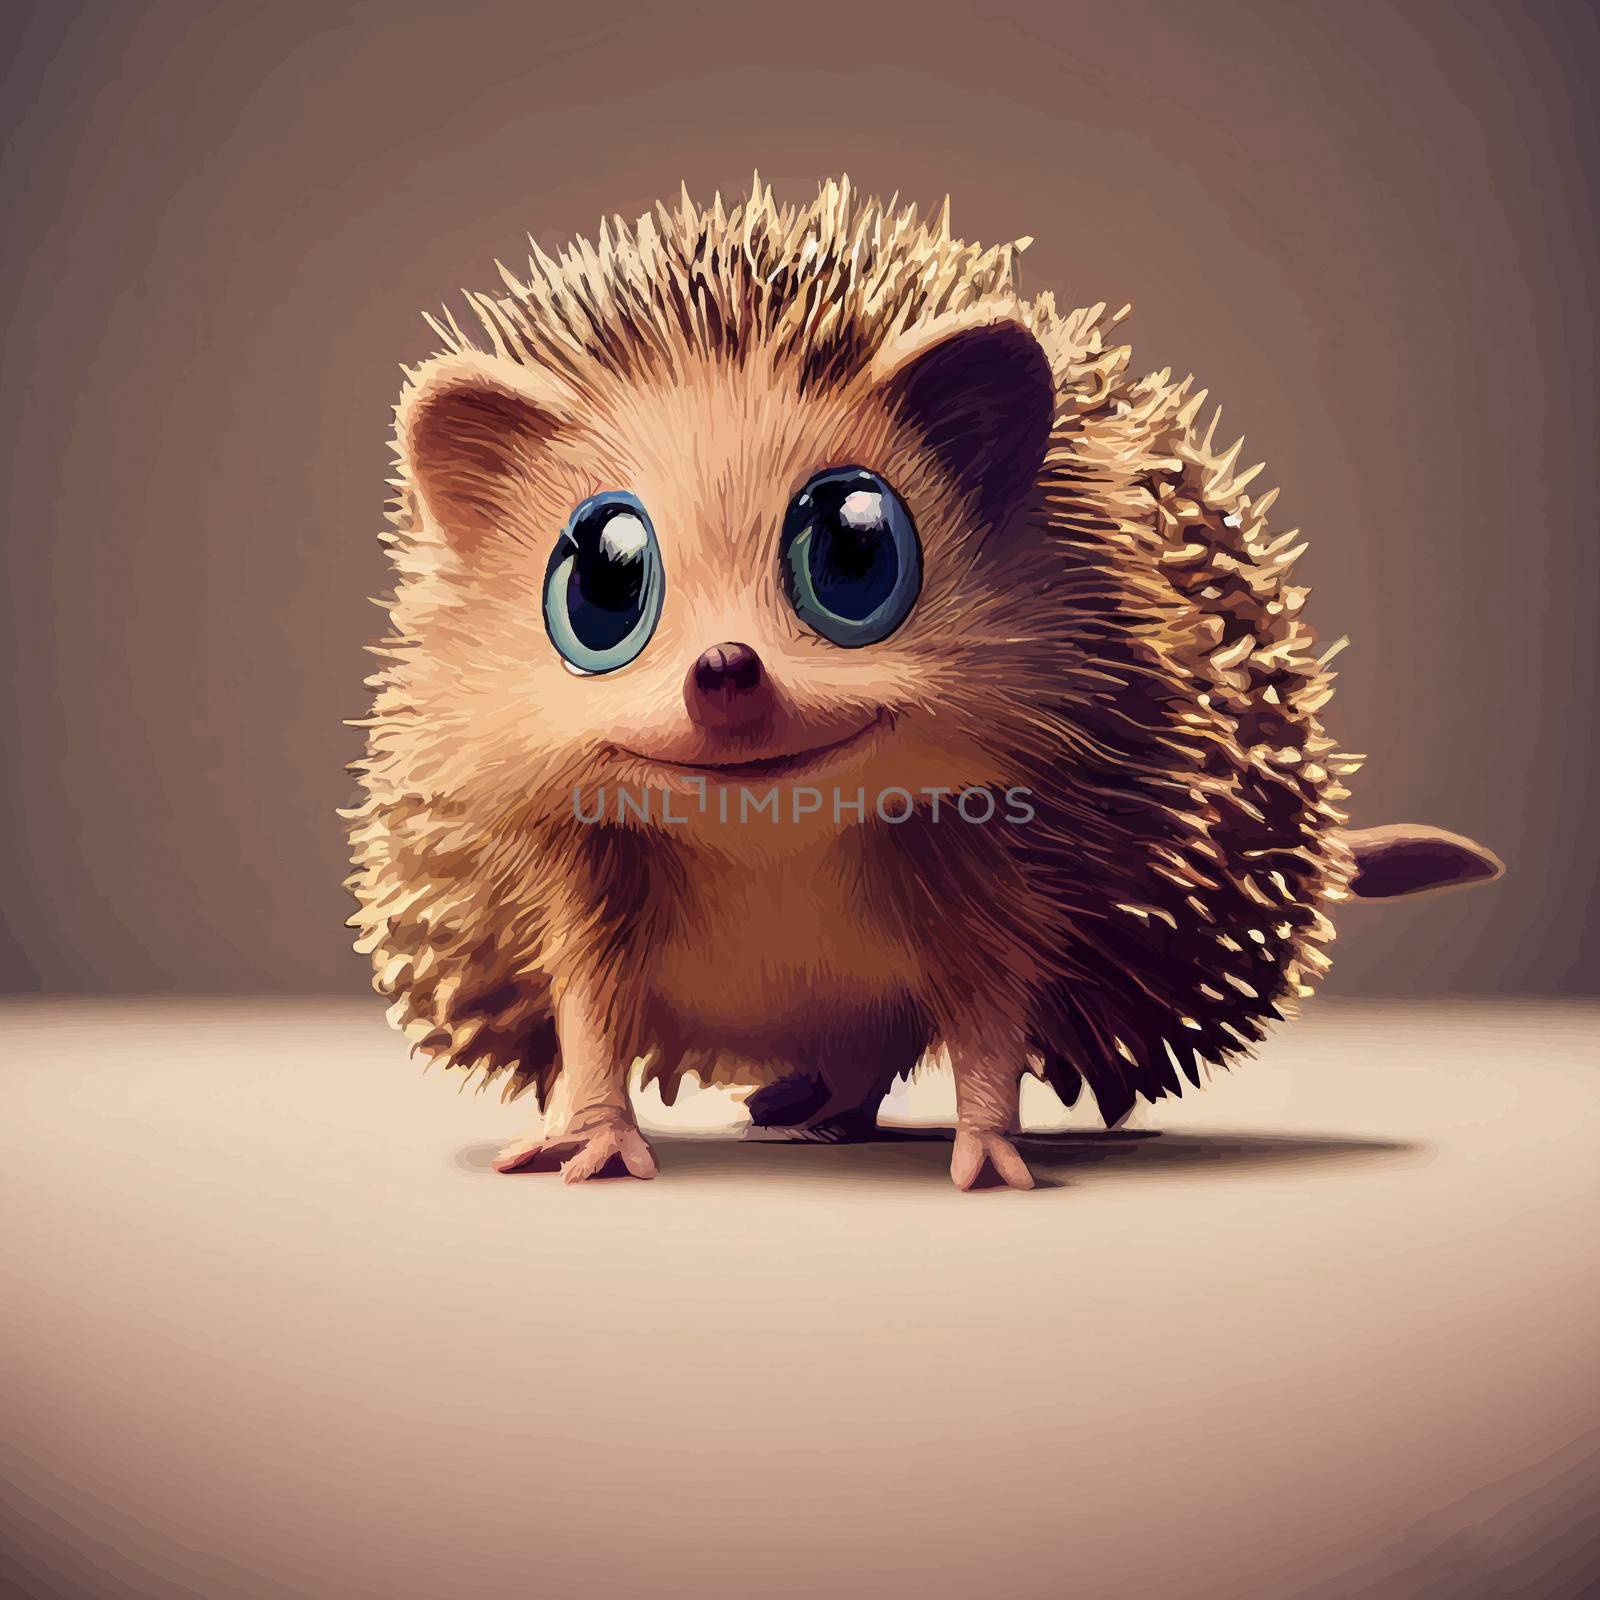 animated illustration of a cute hedgehog, animated baby hedgehog portrait.